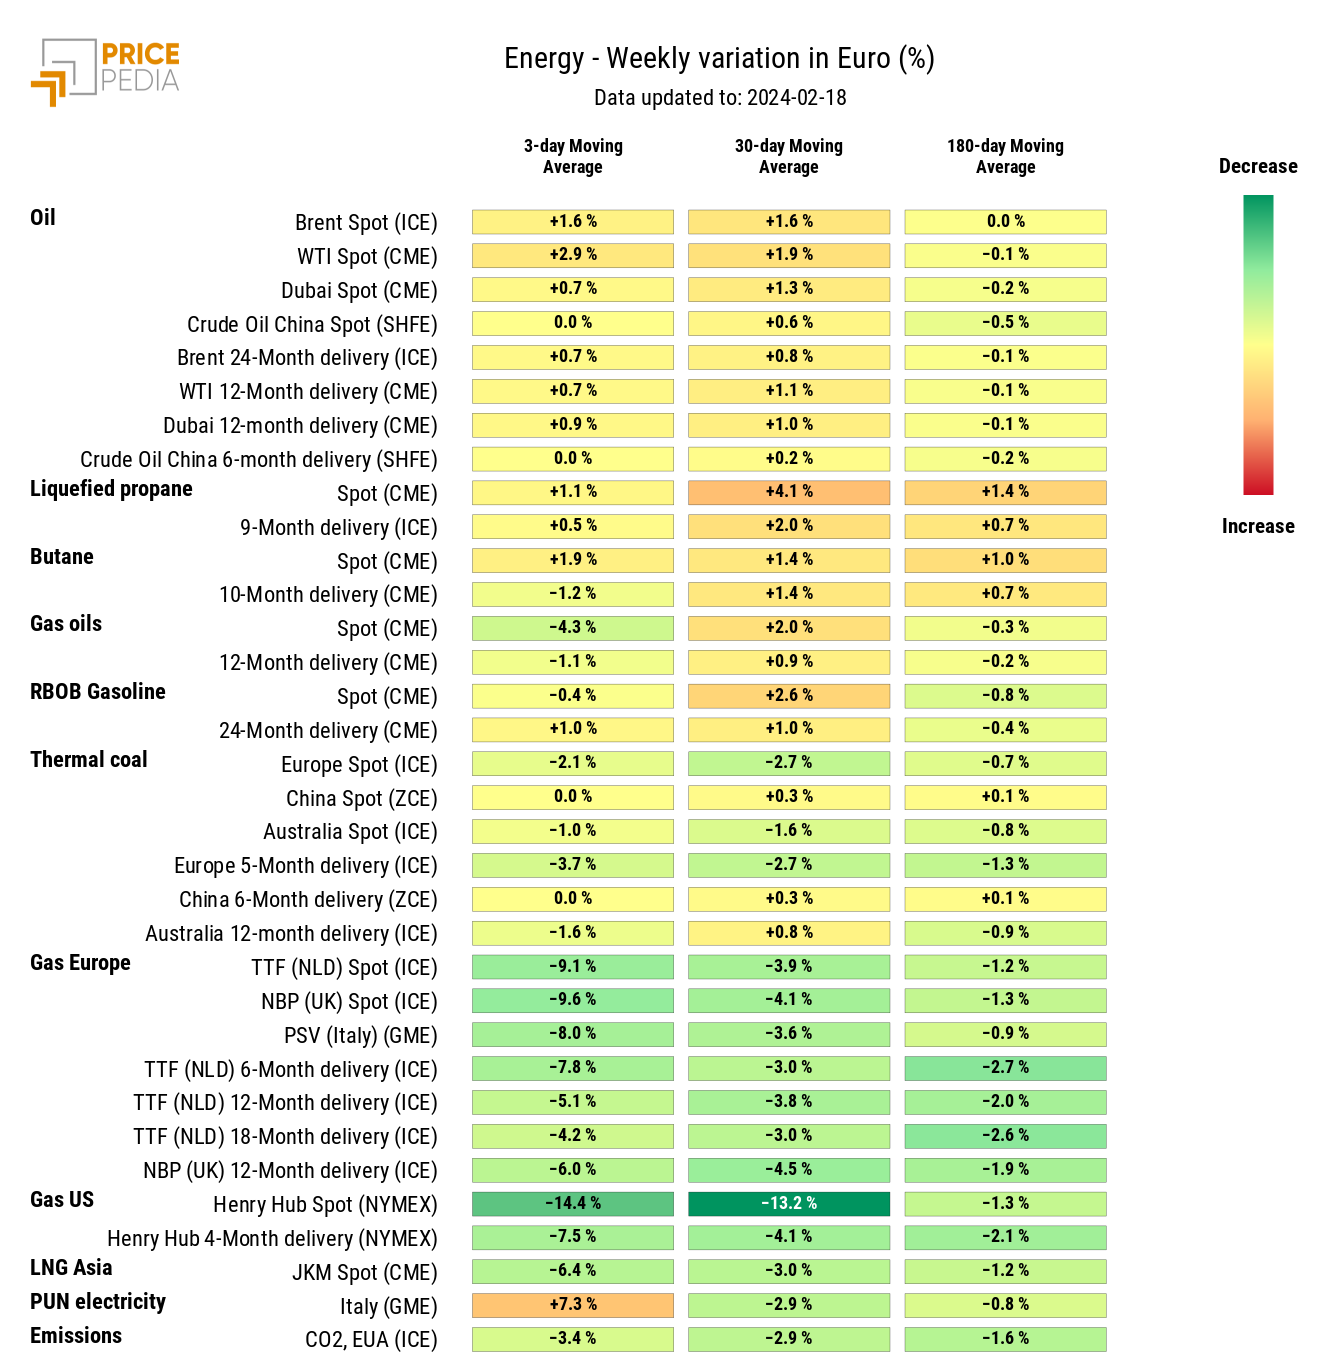 HeatMap of energy prices in euros